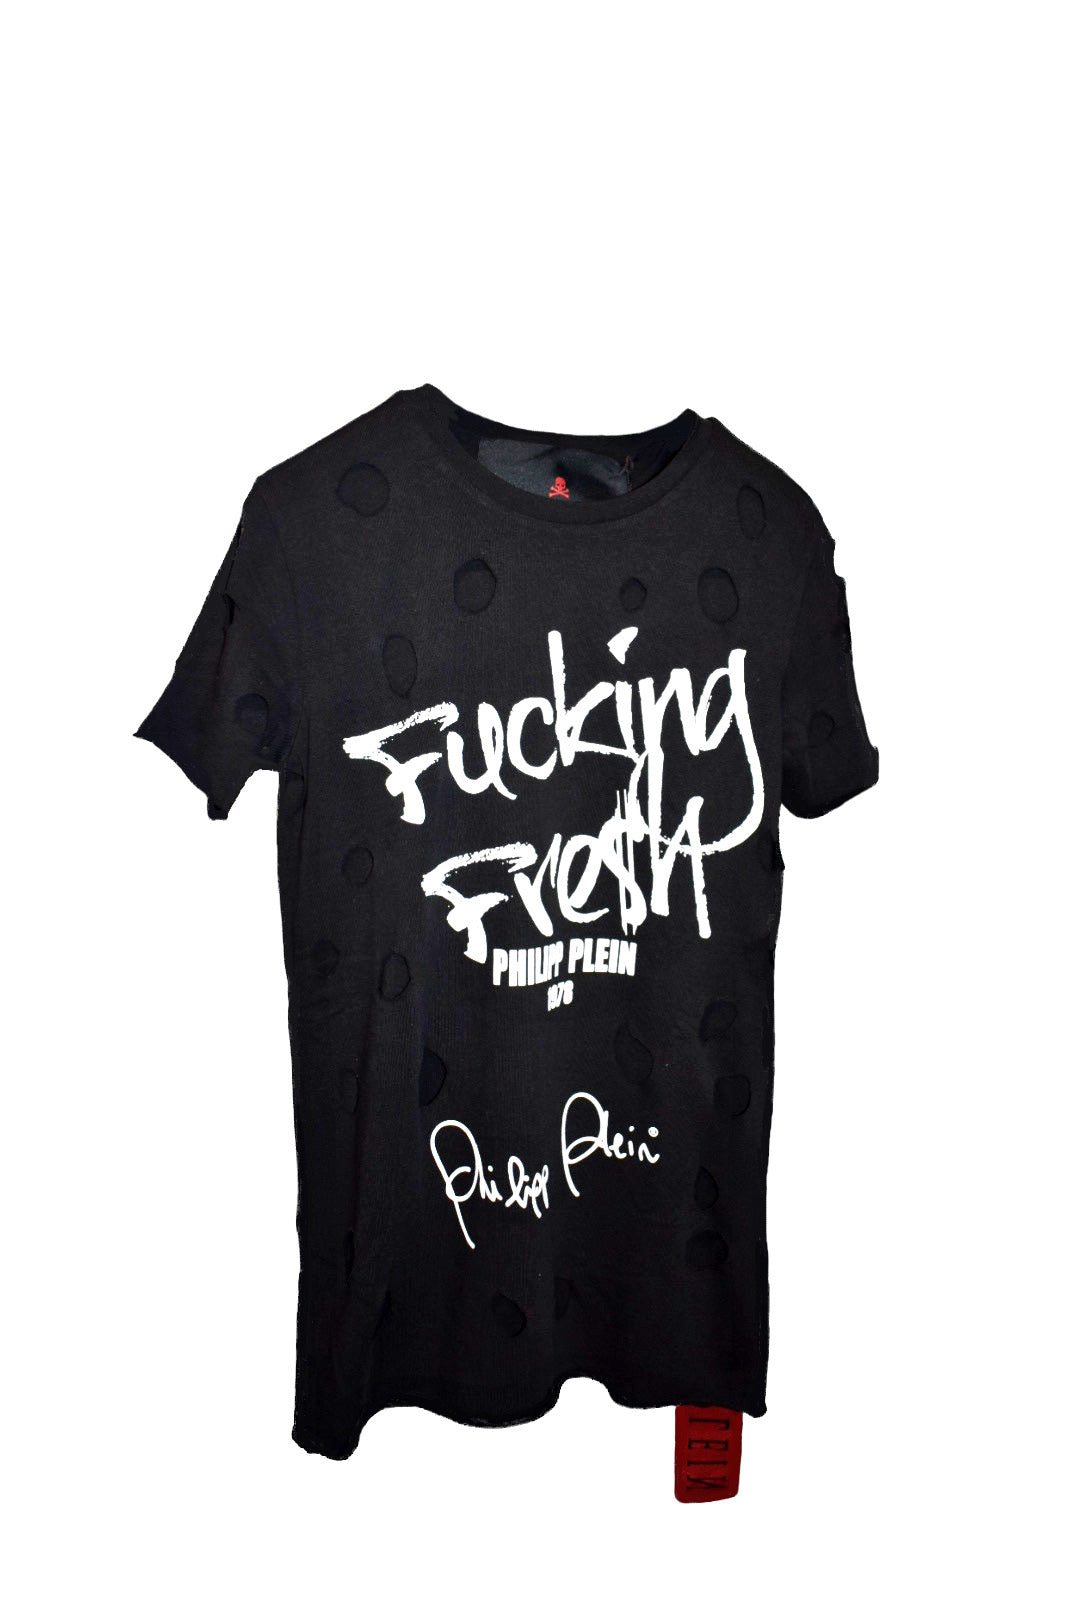 T-shirt Philipp Plein limited edition “Fucking Fresh”